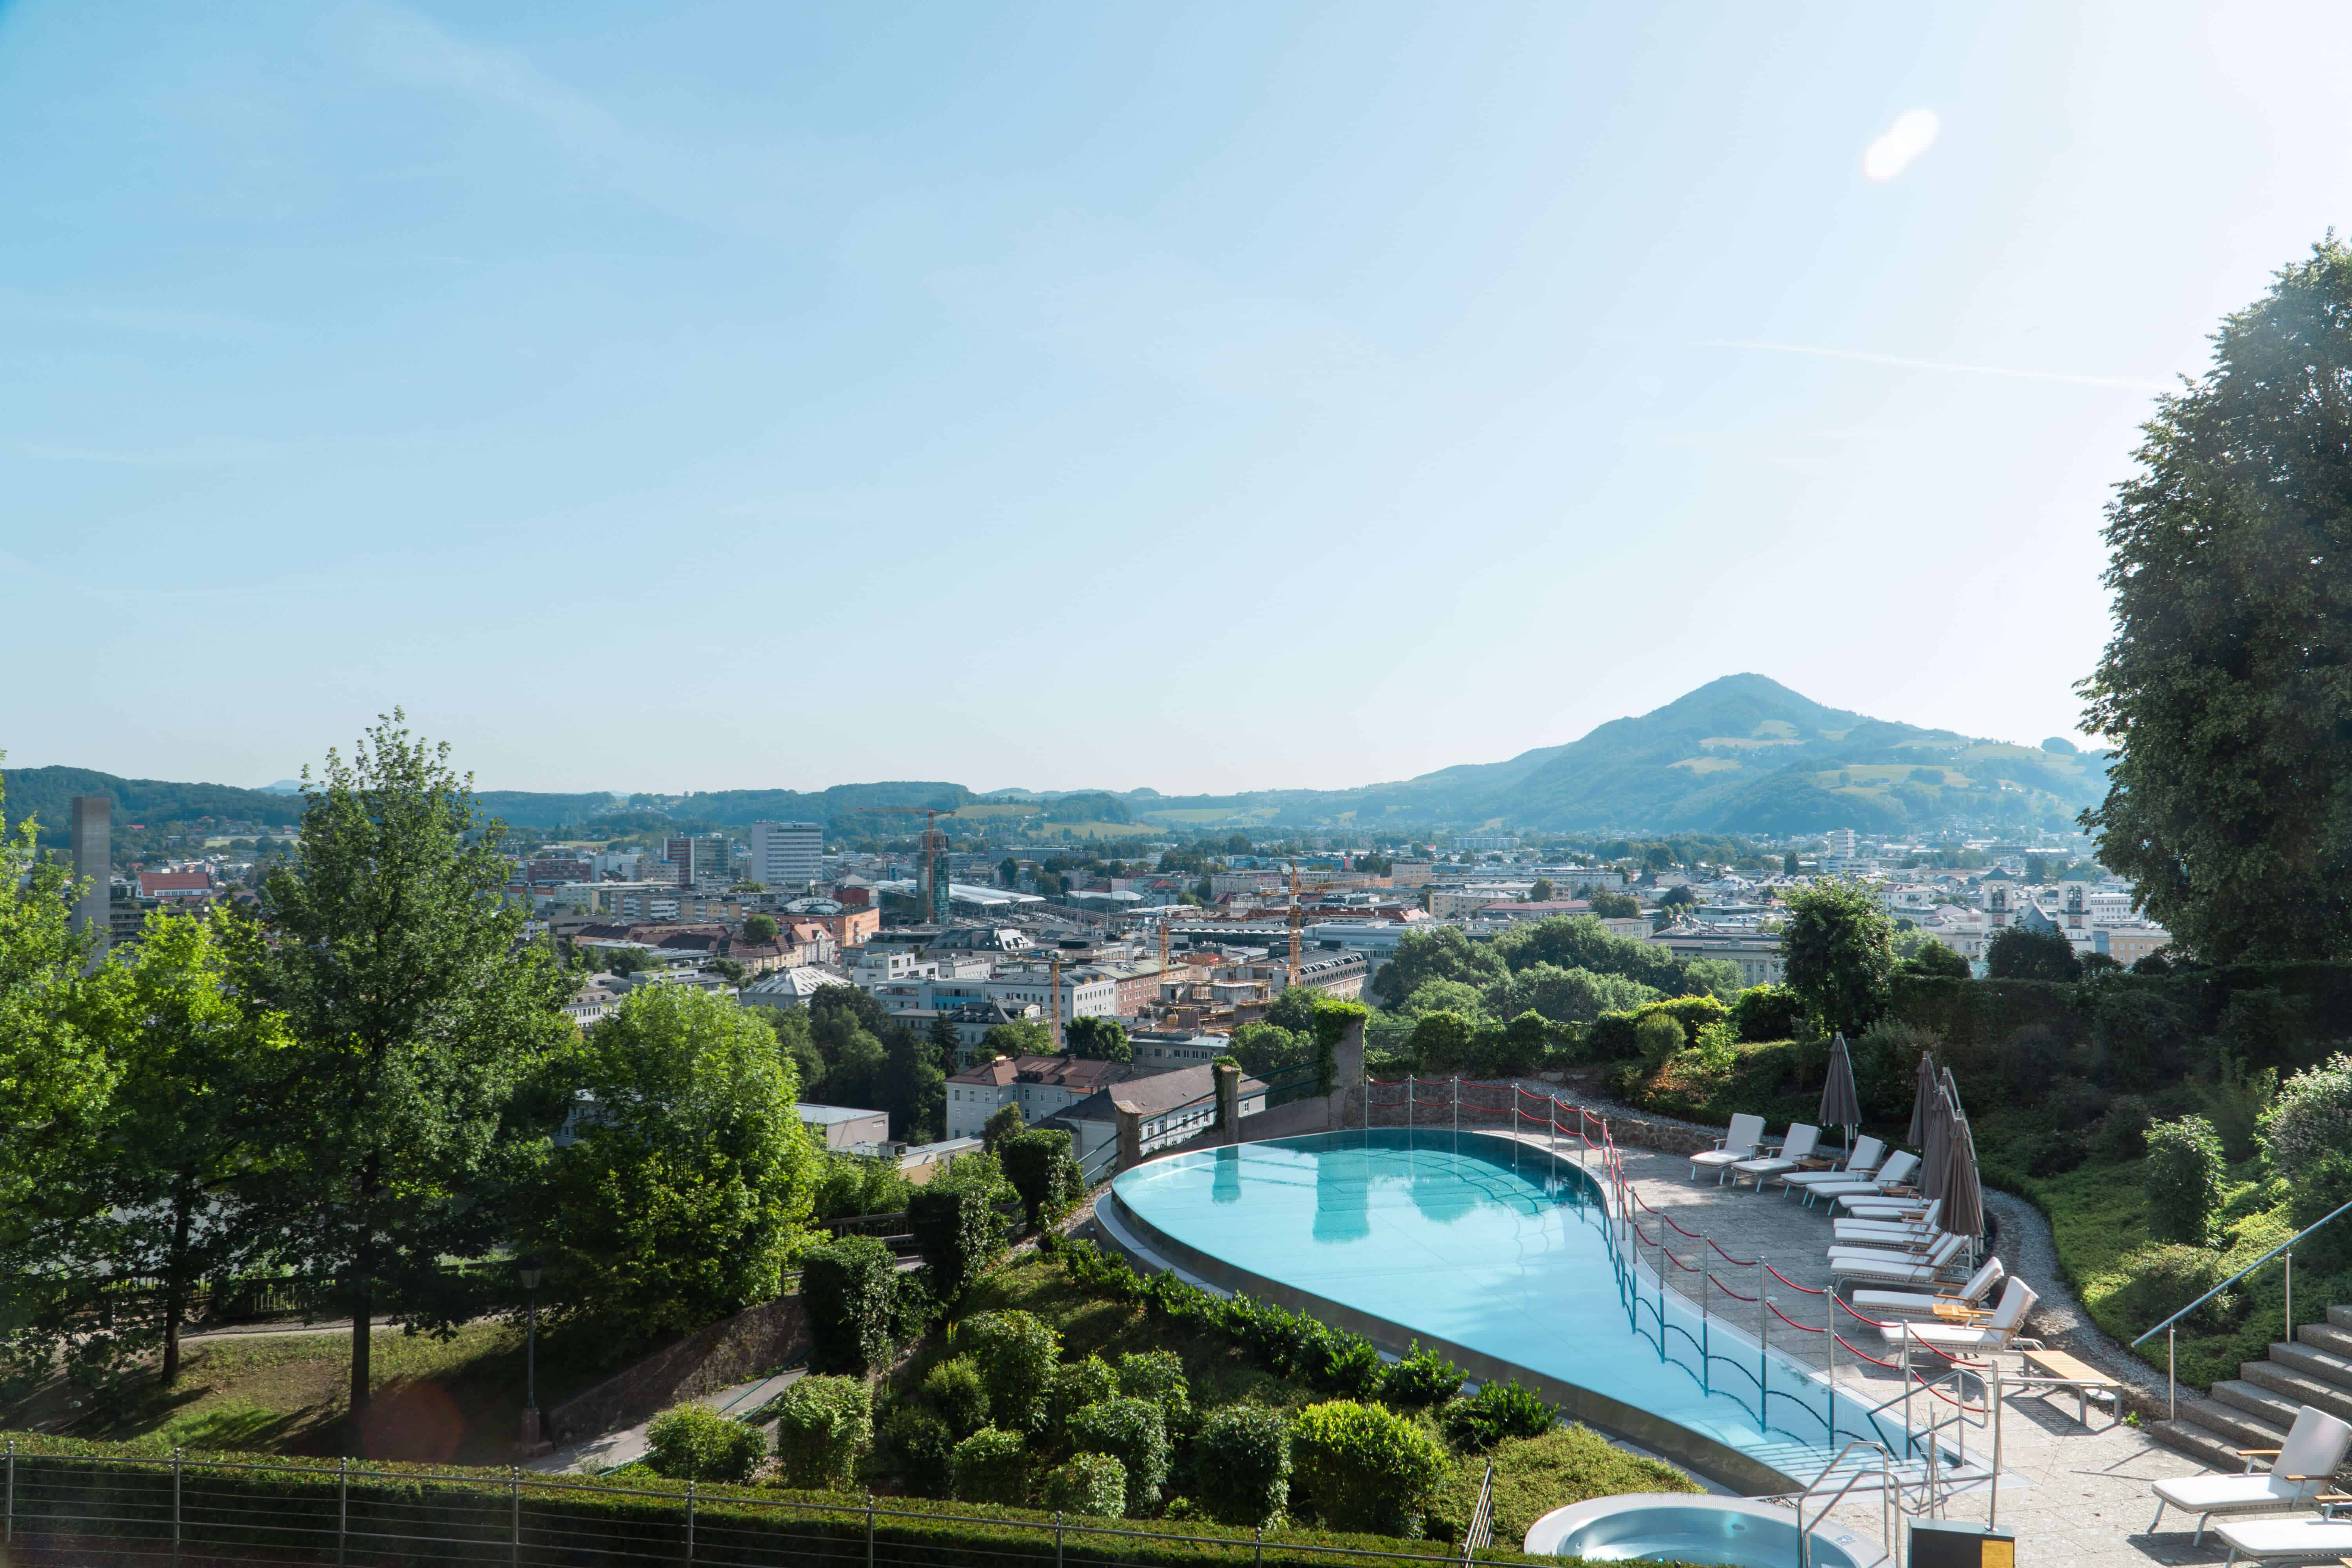 Staying at Hotel Schloss Mönchstein in Salzburg Austria | Pool Views | The Republic of Rose | #Salzburg #Austria #Europe #Travel #SoundofMusic